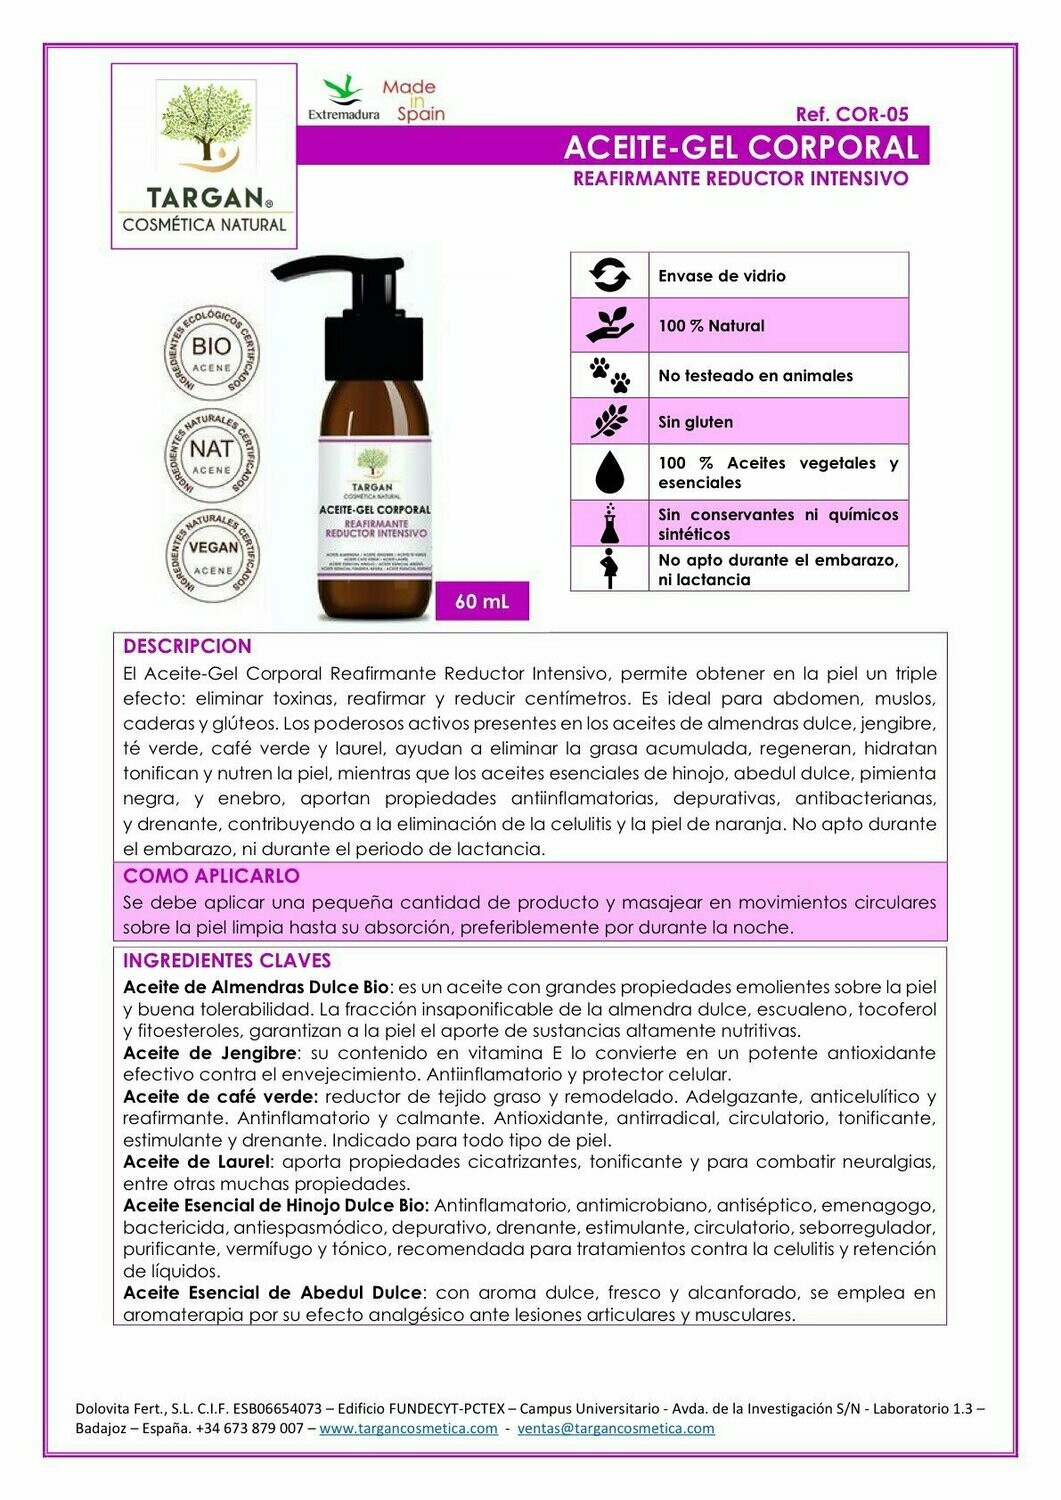 Aceite-Gel Corporal Reafirmante Reductor Intensivo (Ref.COR-05)